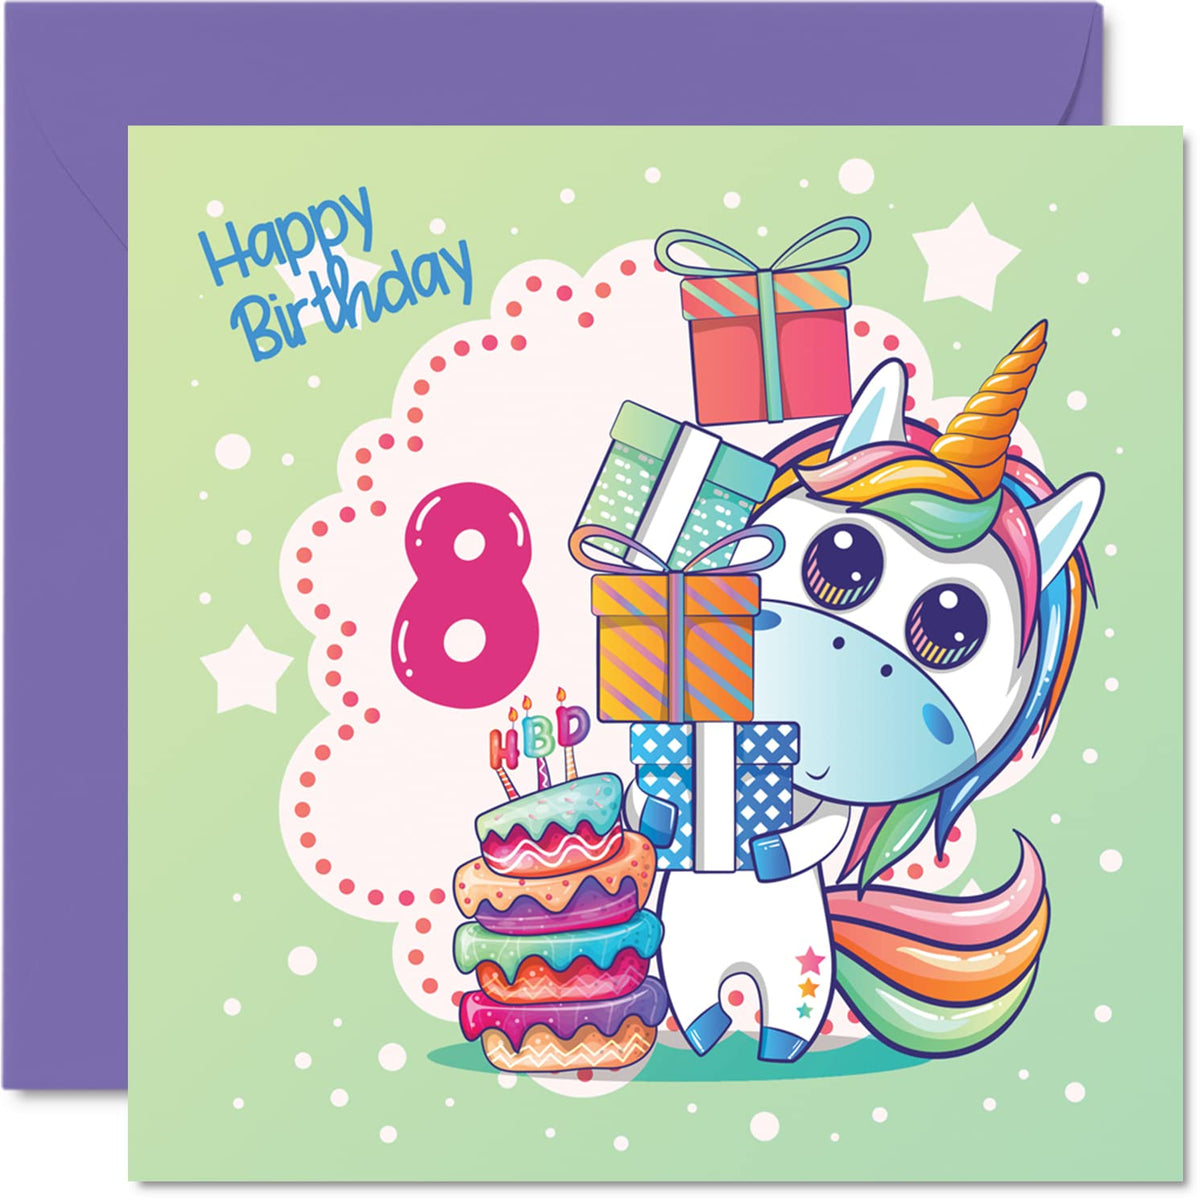 8th Birthday Card Girl - Magical Unicorn Birthday Card - Happy Birthday Card 8 Year Old Girl, Girls Birthday Cards for Her, 145mm x 145mm Greeting Cards for Daughter Niece Granddaughter Kids Children